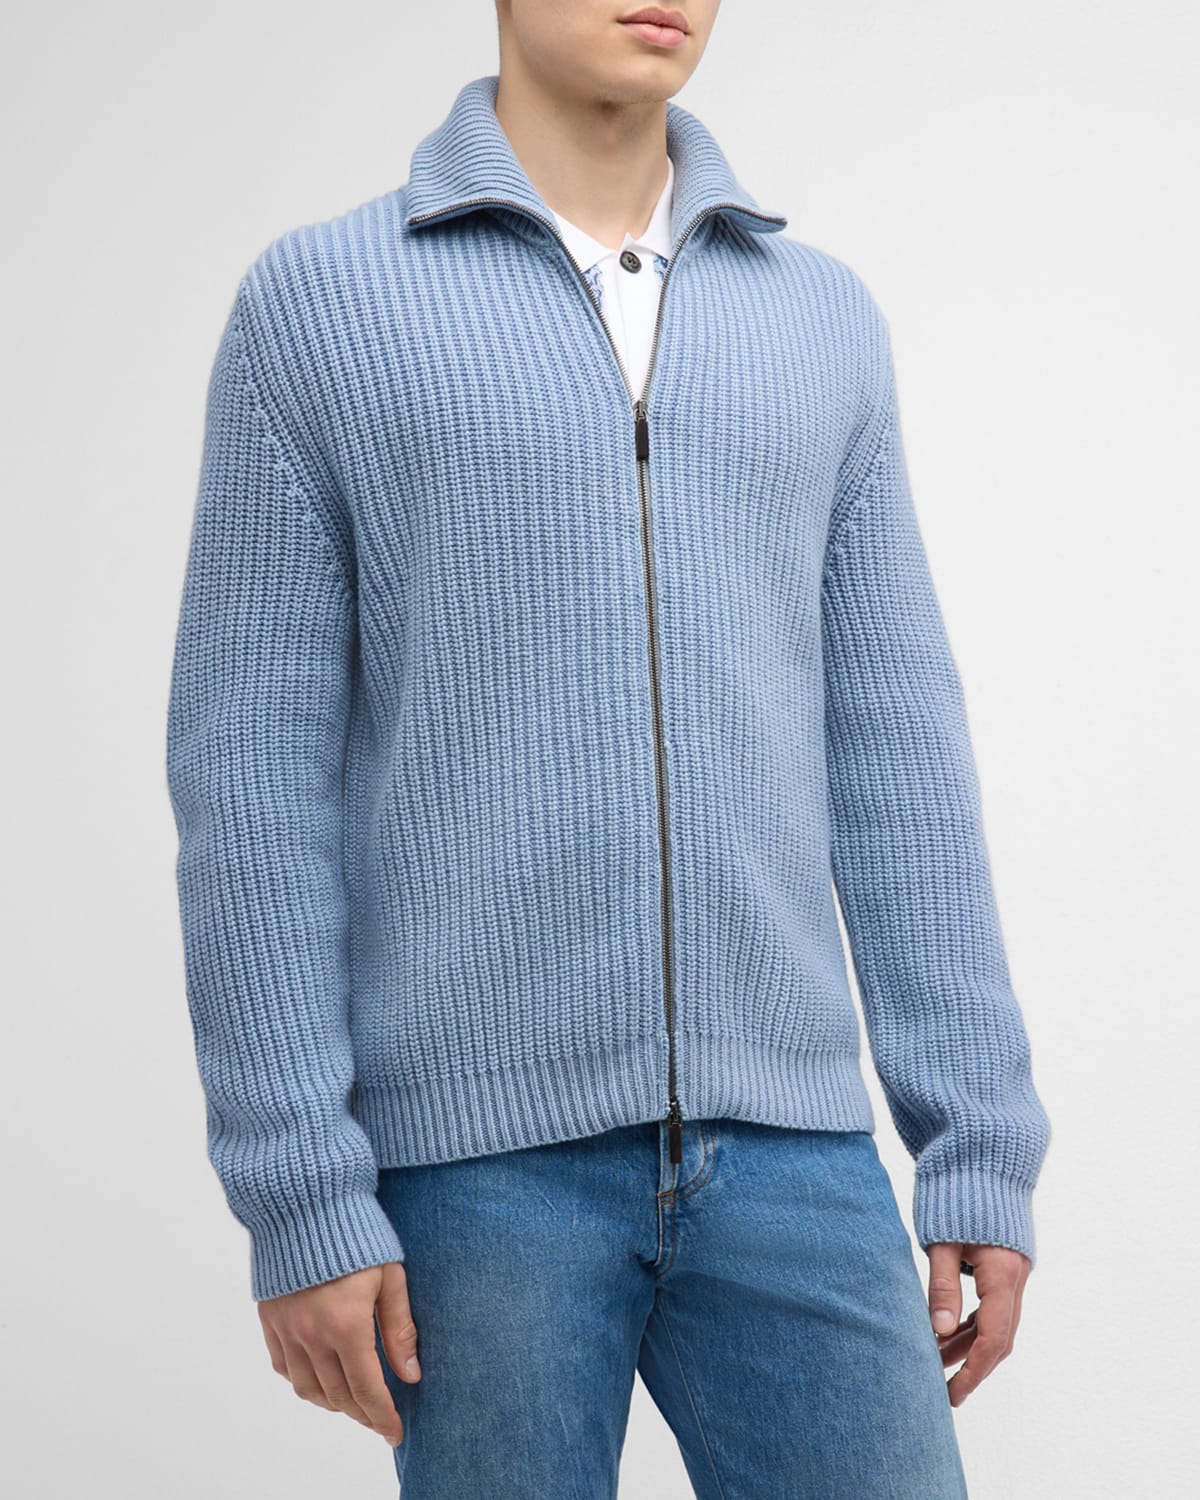 Men's Carino Stonewashed Cashmere Full-Zip Sweater